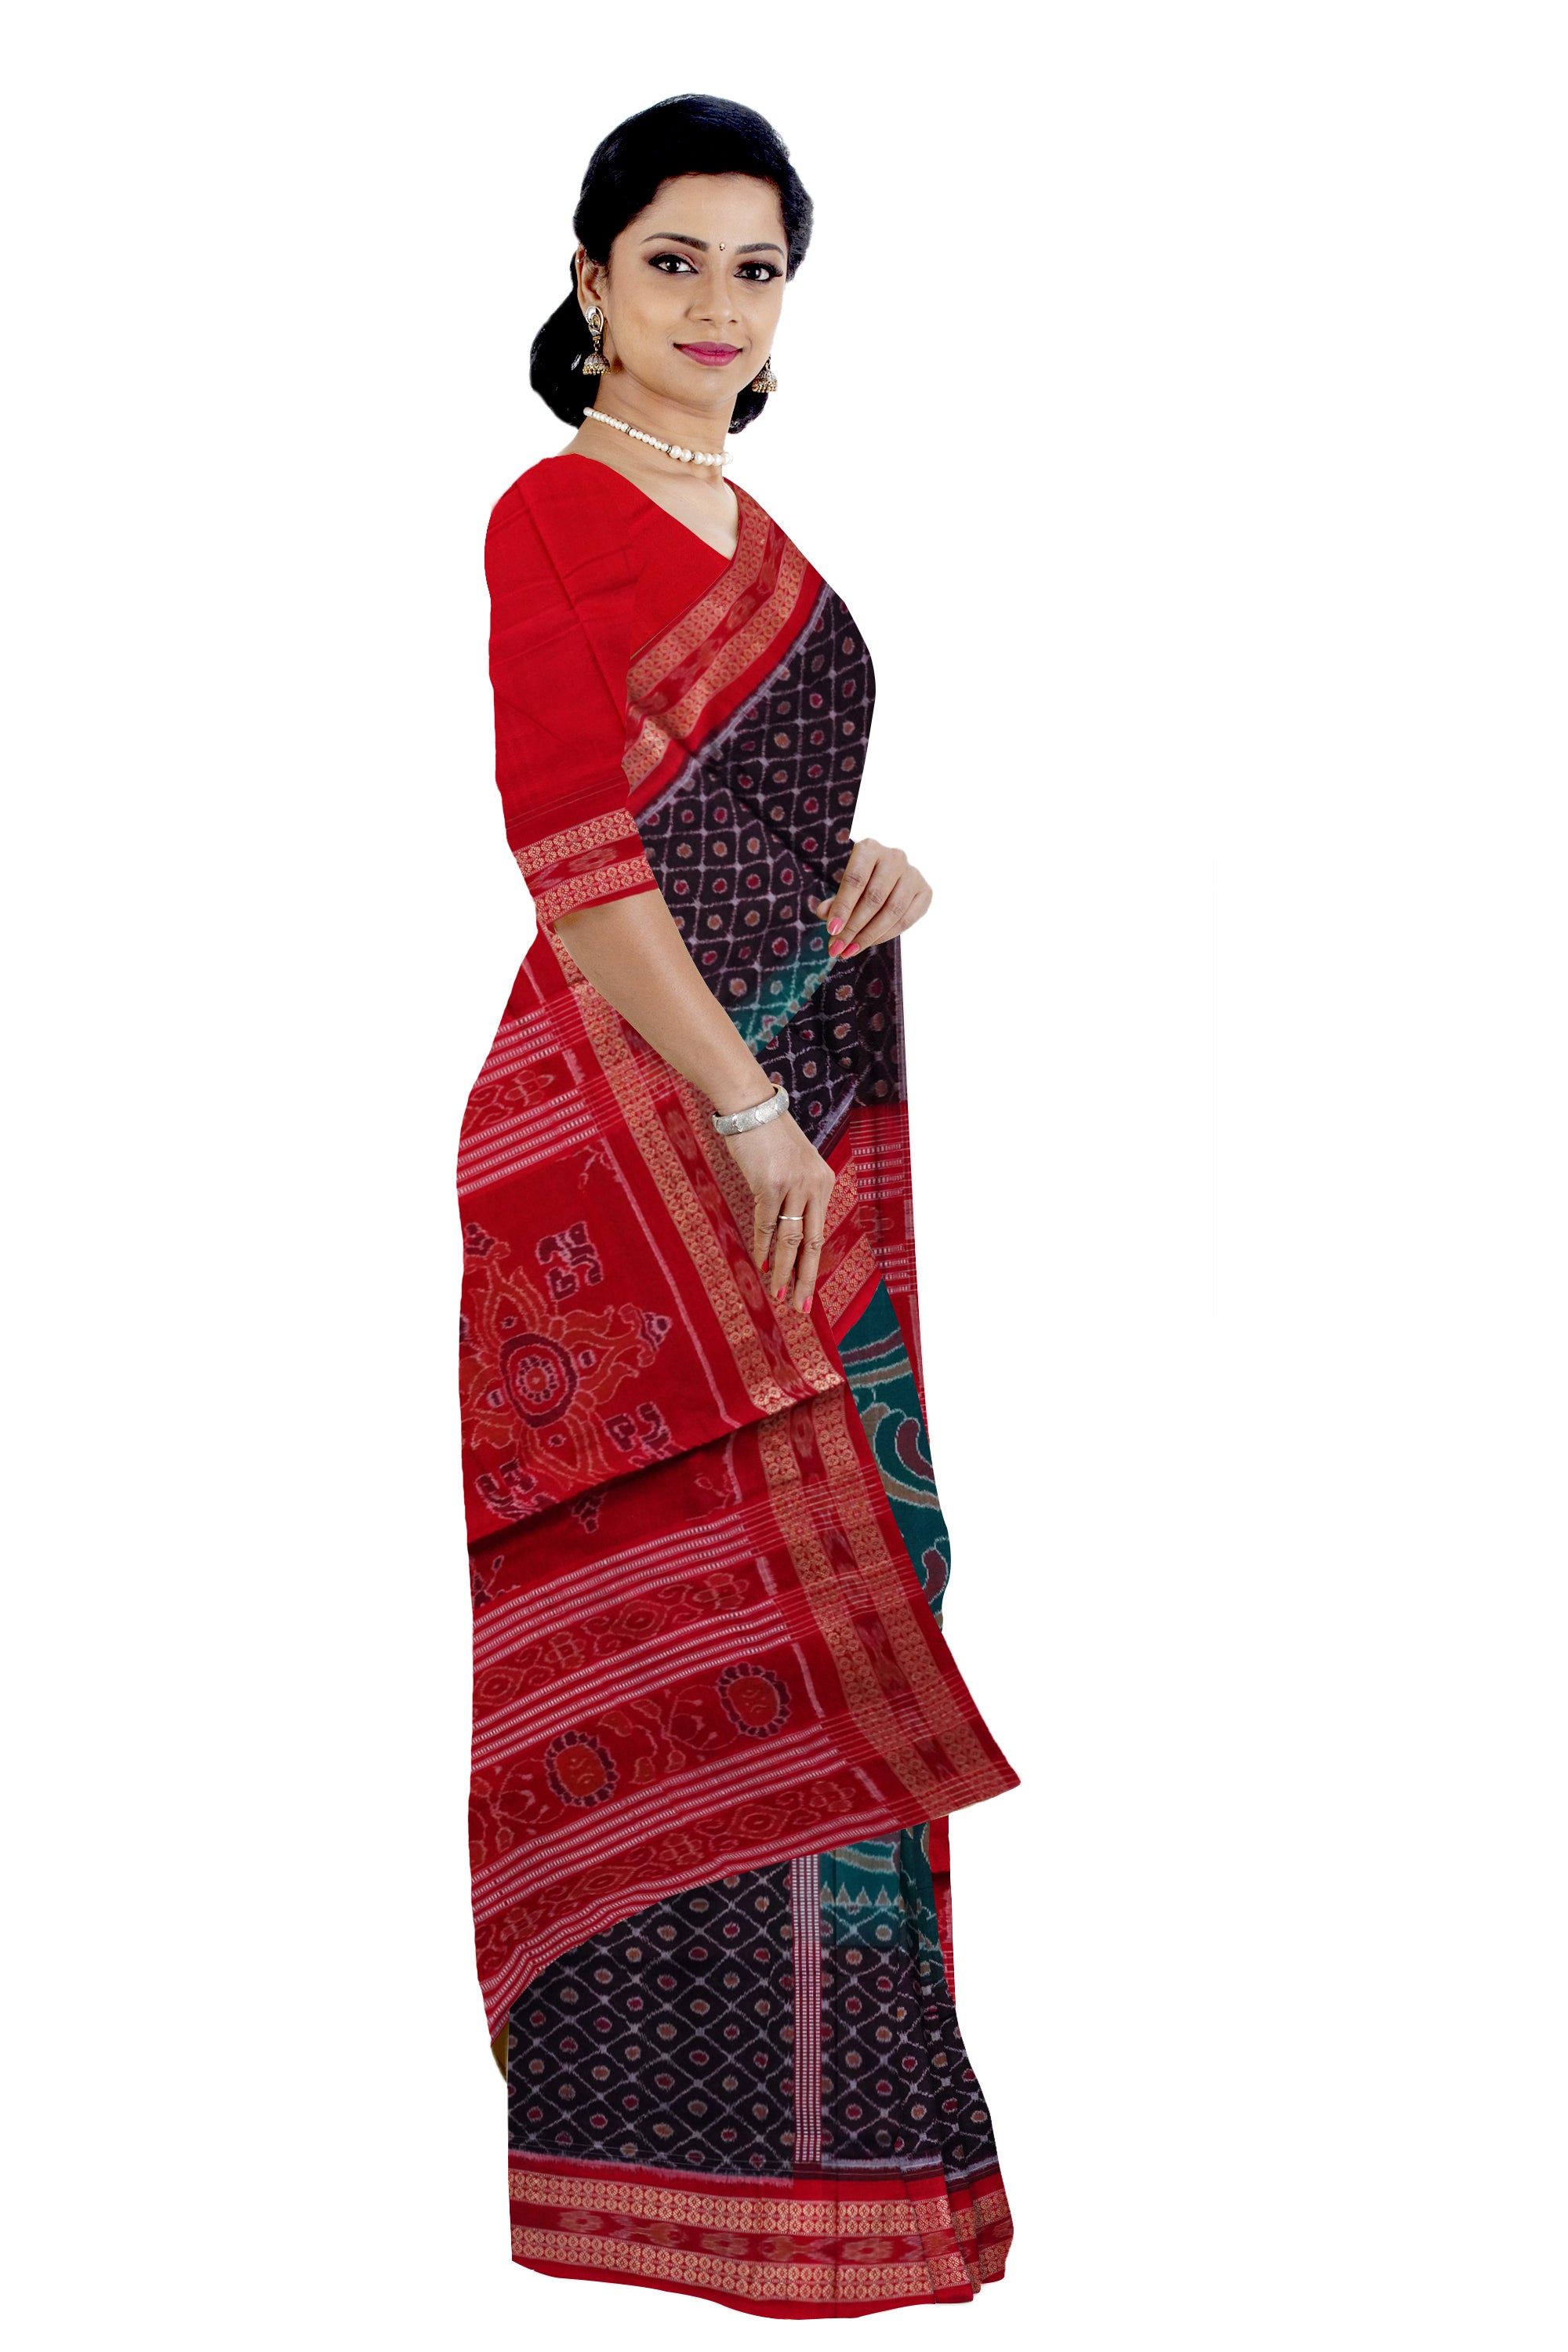 Black, Green and Red color new design Sambalpuri cotton saree. - Koshali Arts & Crafts Enterprise